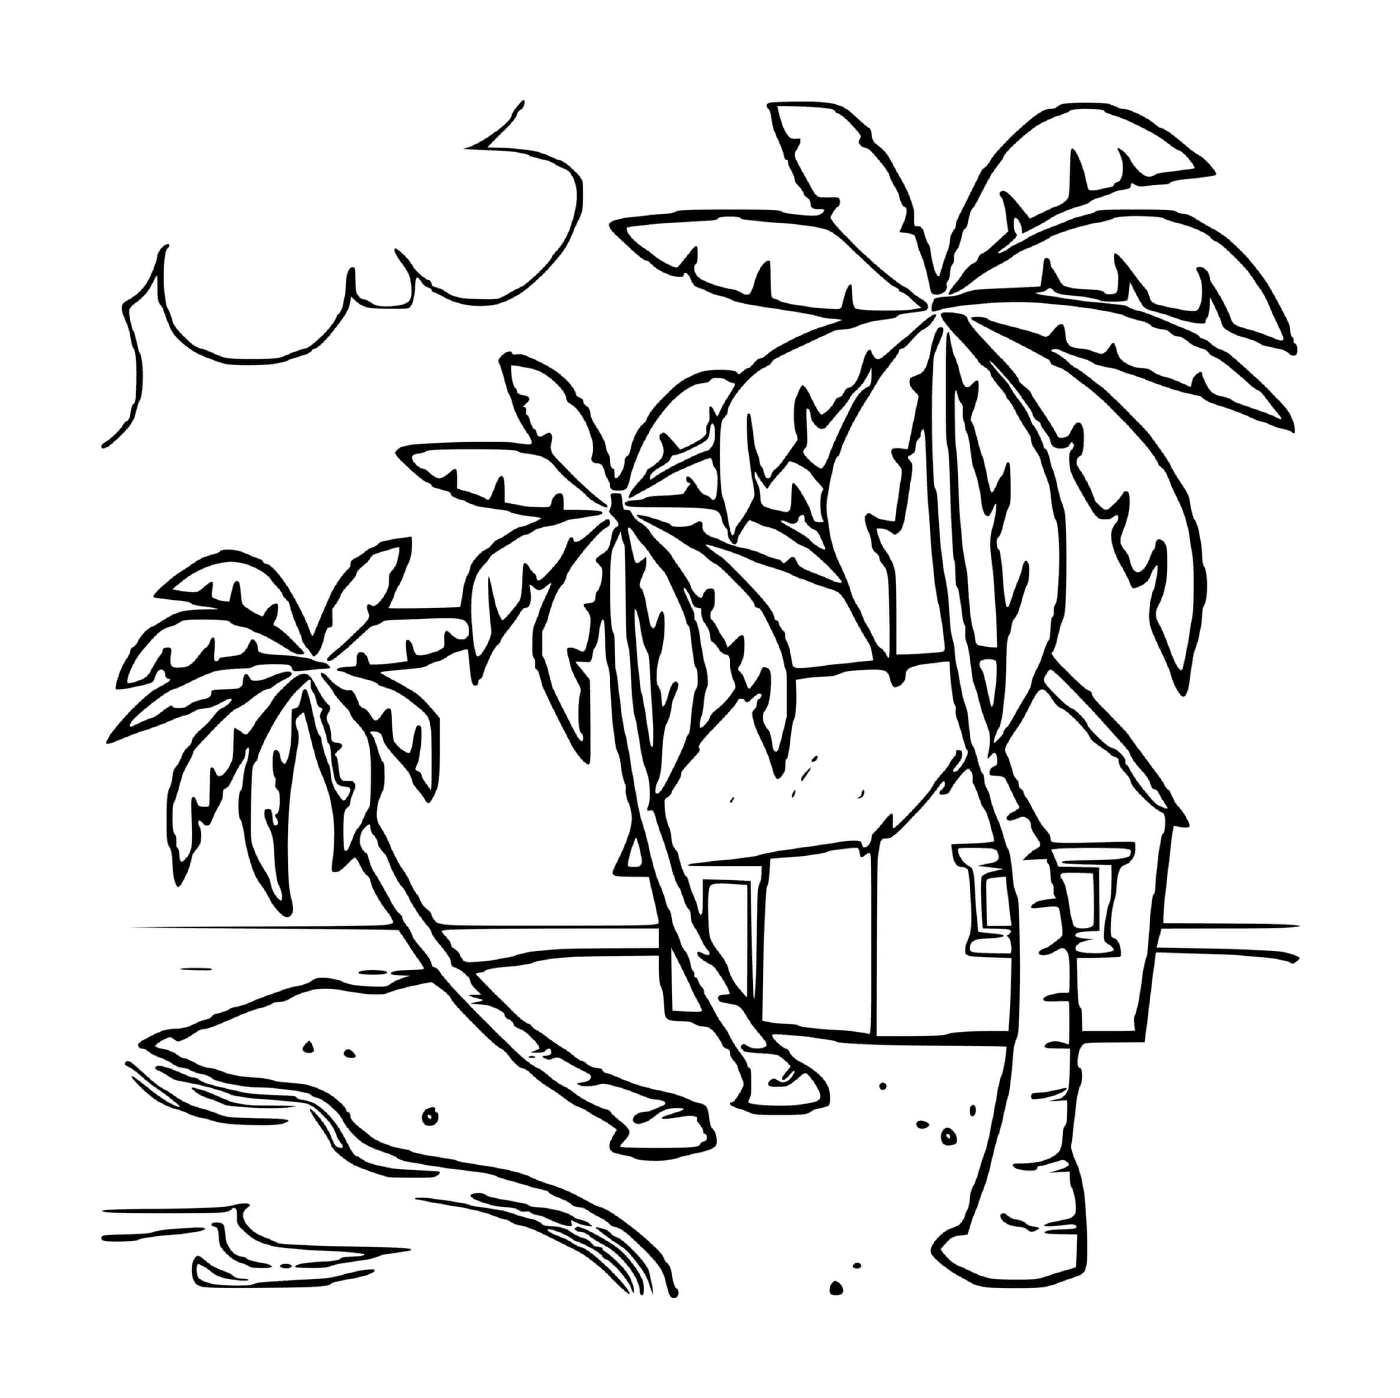  A house by the sea with a beach 